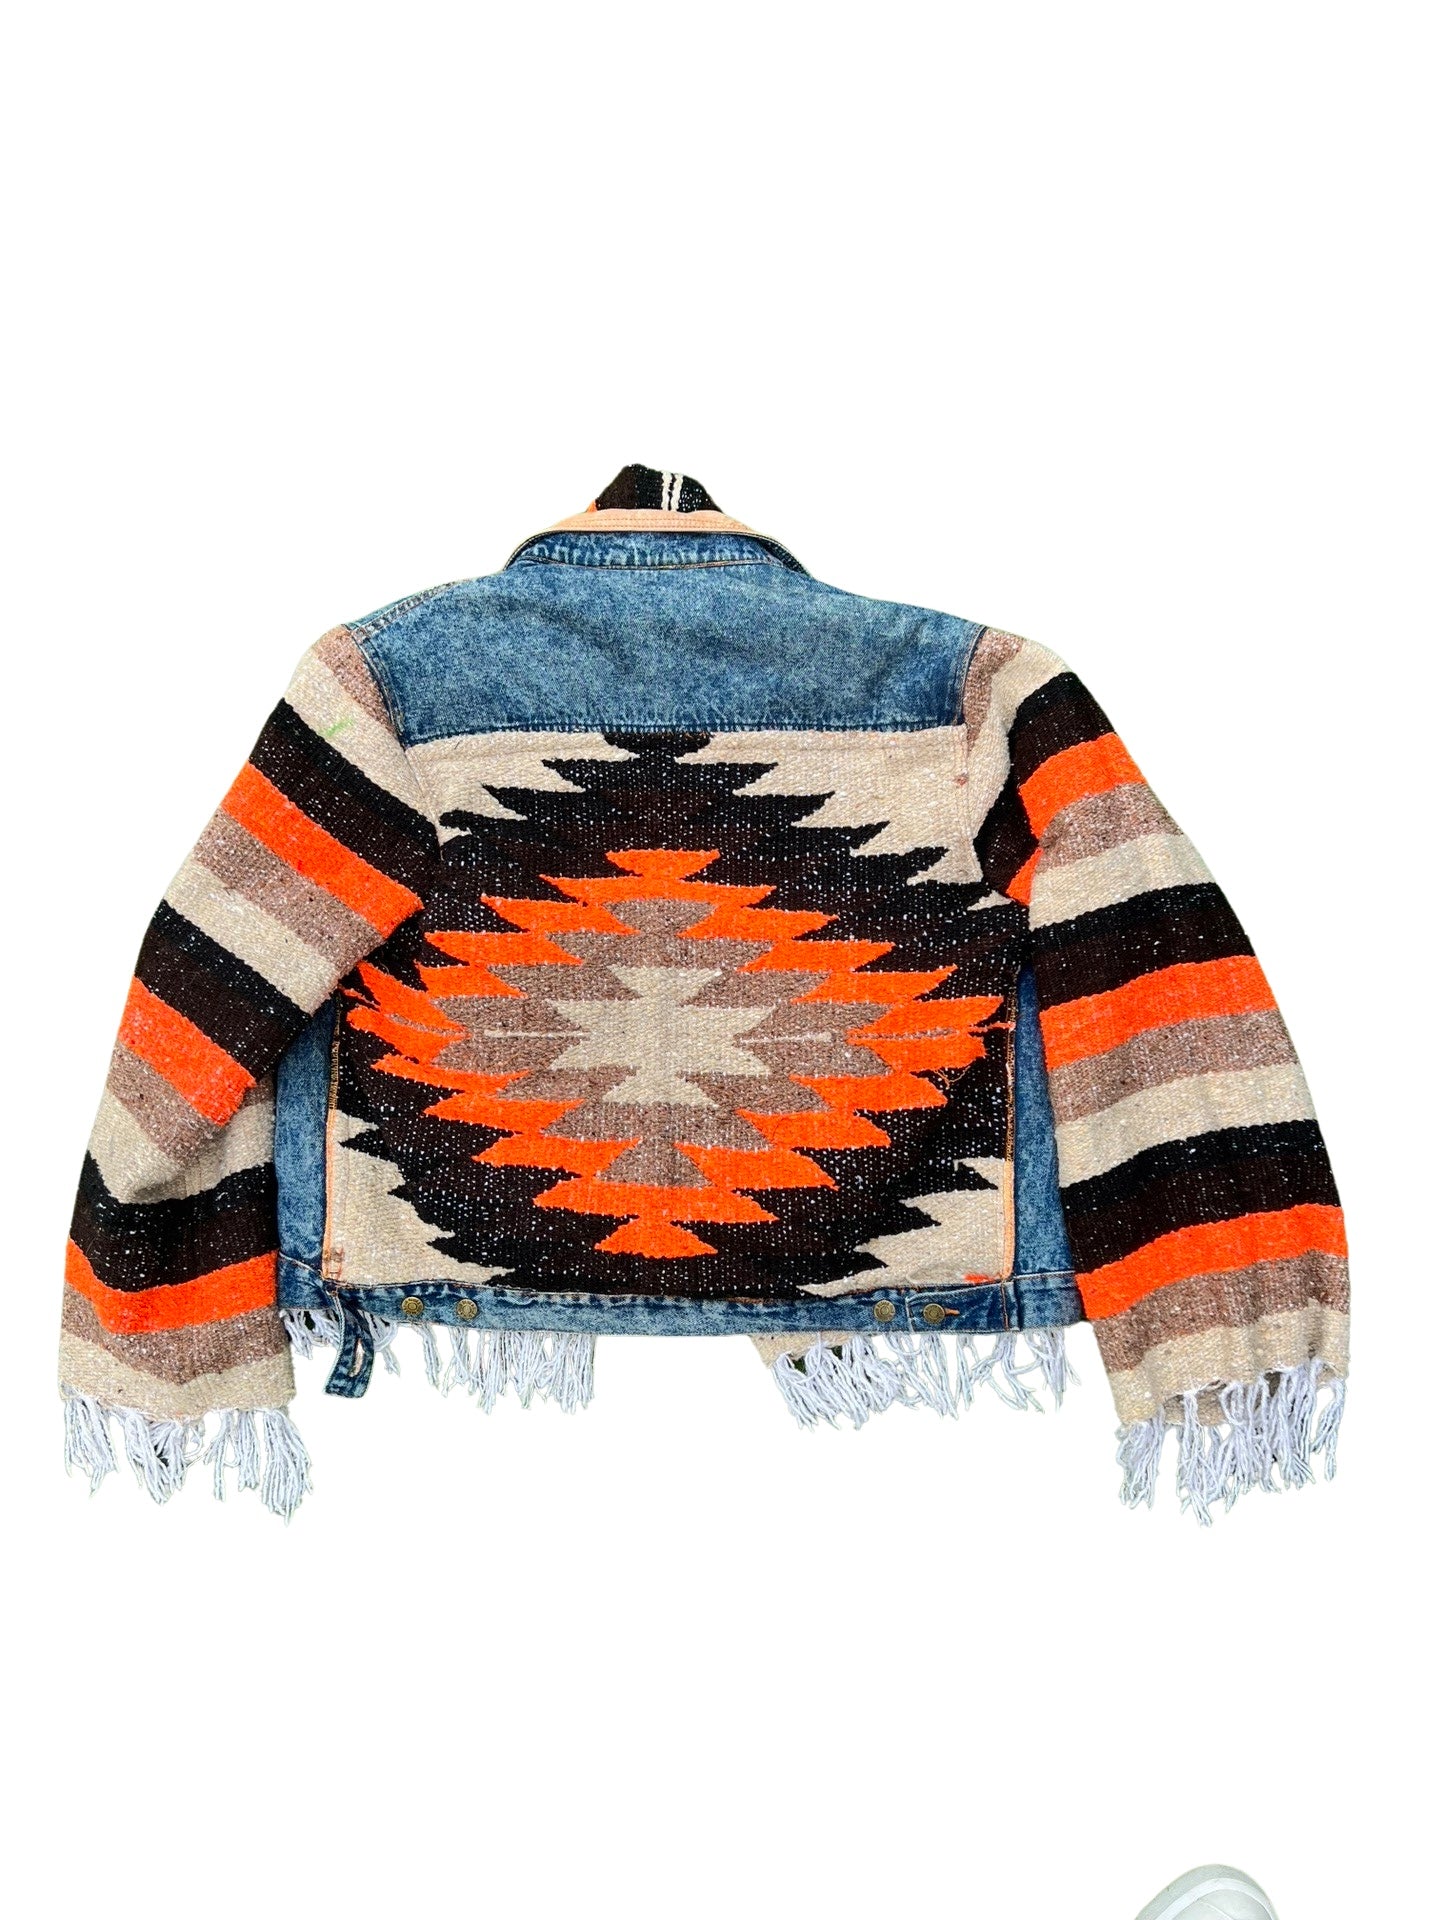 R3 Tribal Denim Jacket Orange &Tan